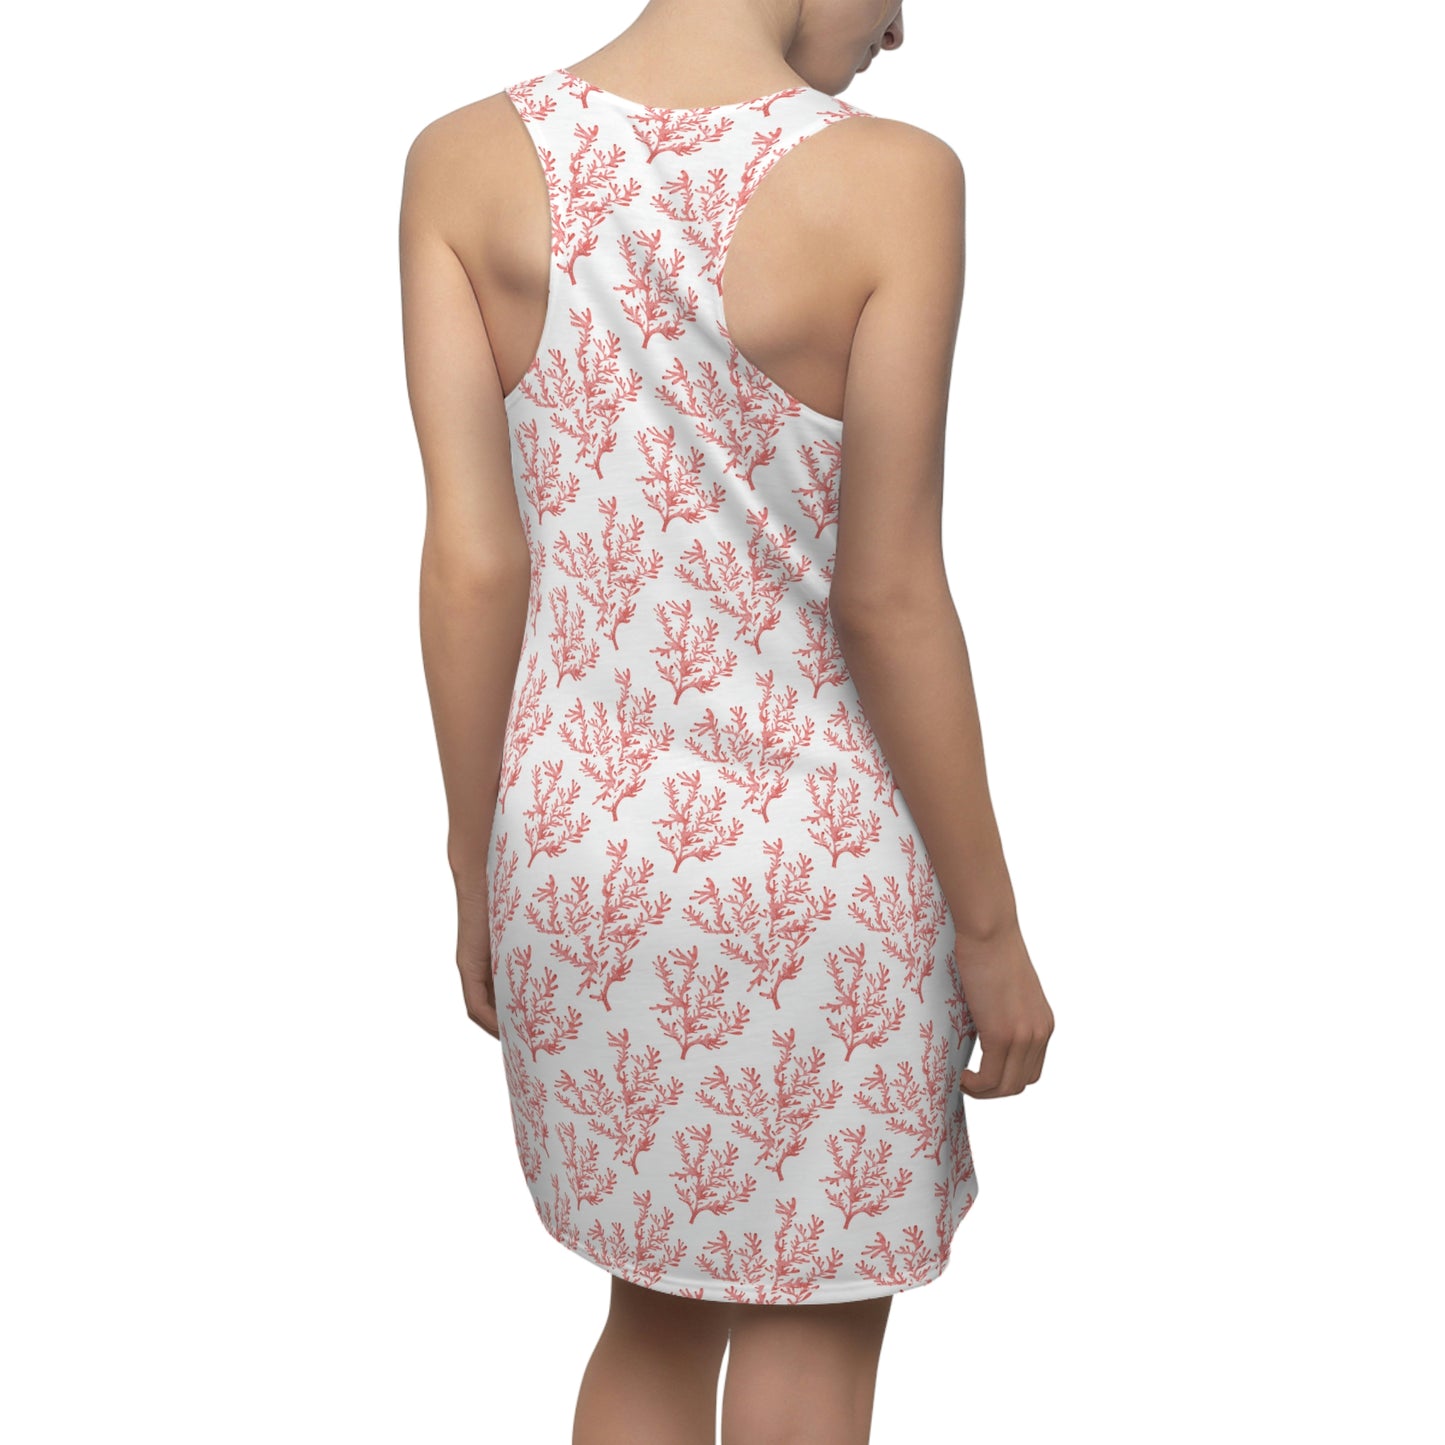 Women's Cut & Sew White Coral Racerback Dress